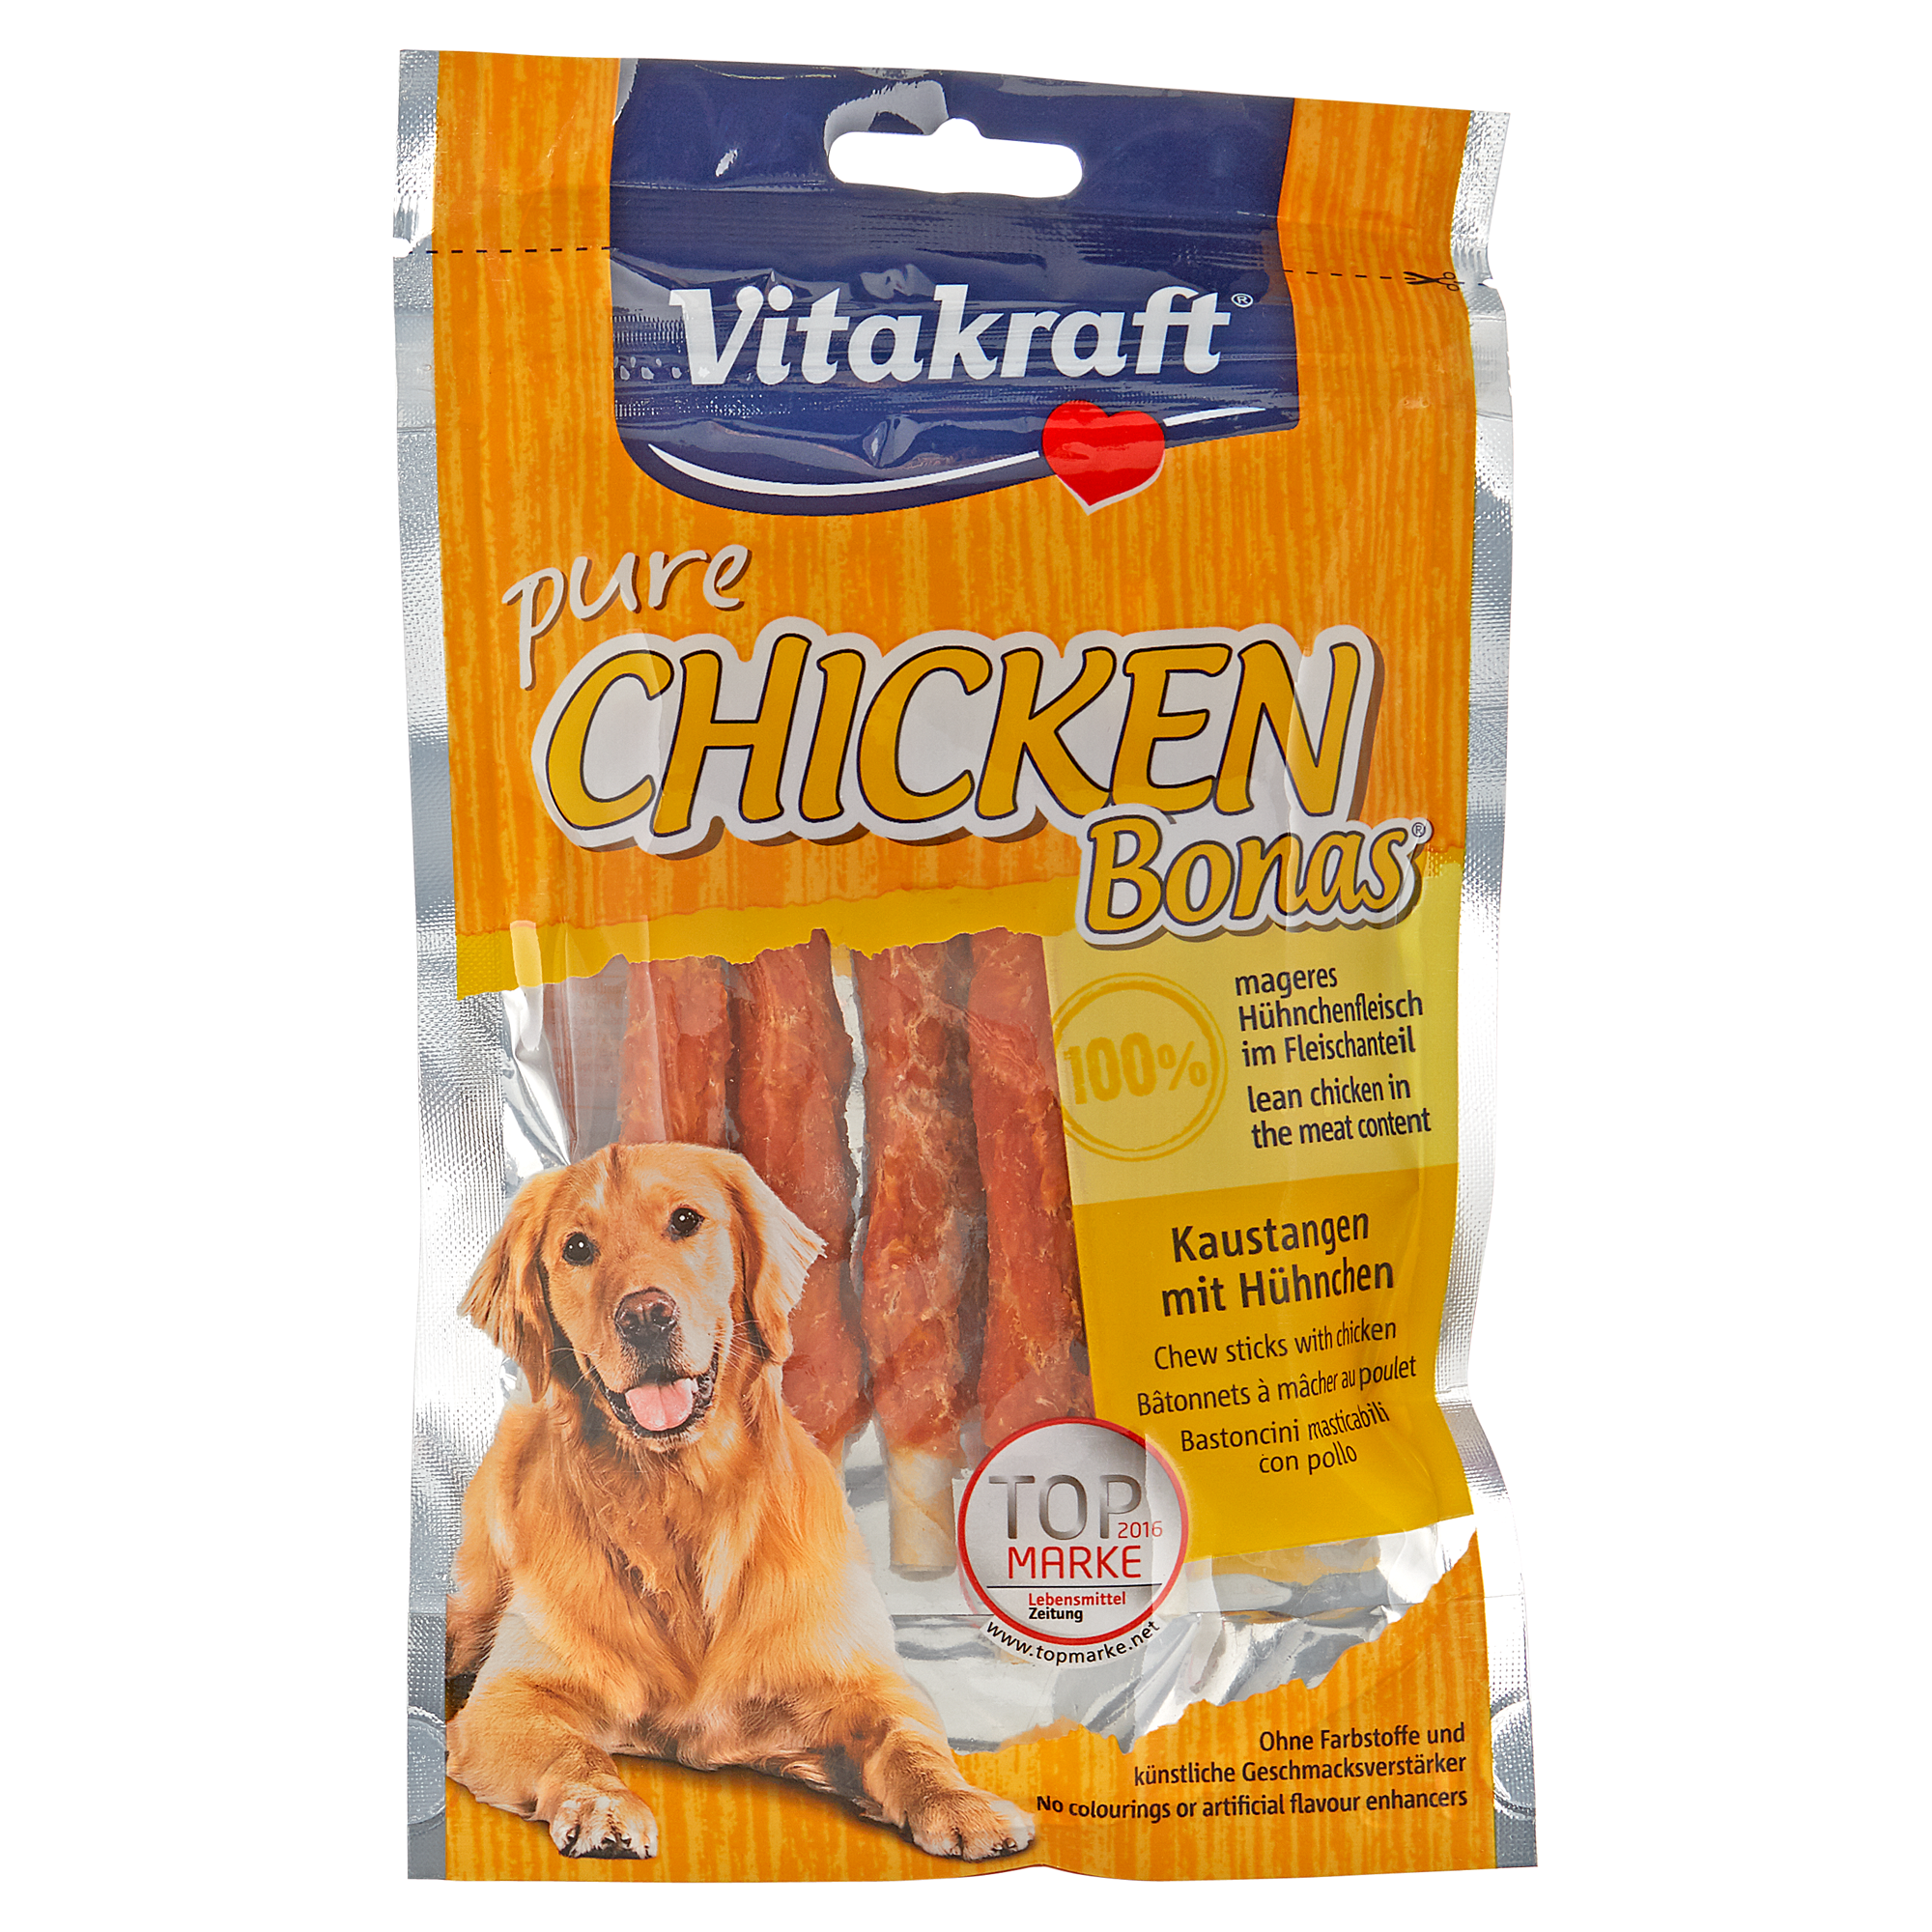 Hundesnacks "Pure" Chicken Bonas Kaustangen mit Hühnchen 80 g + product picture